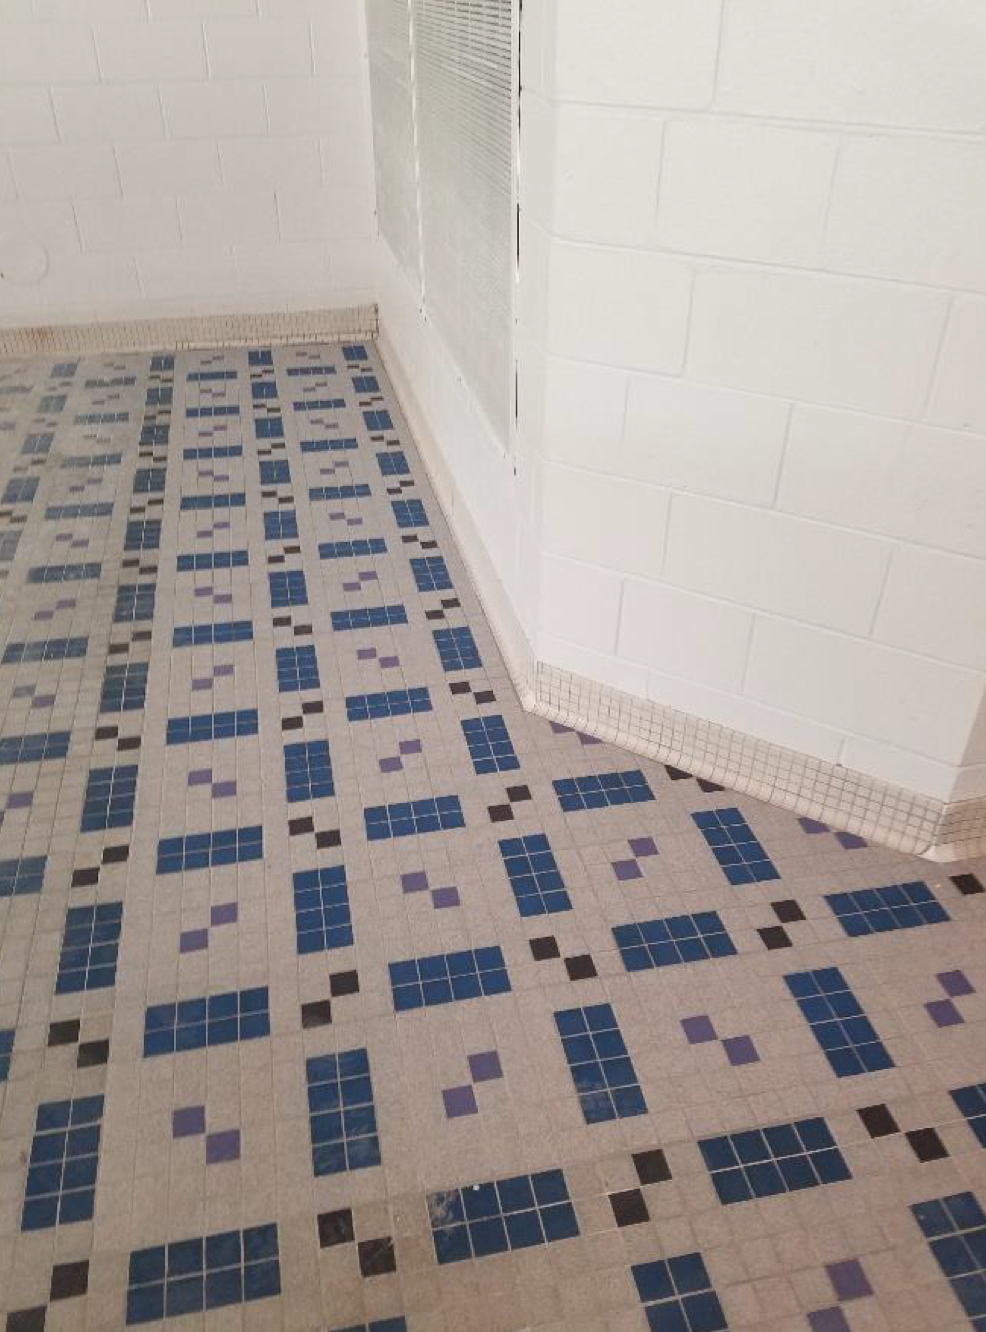 New floor tile in pool area